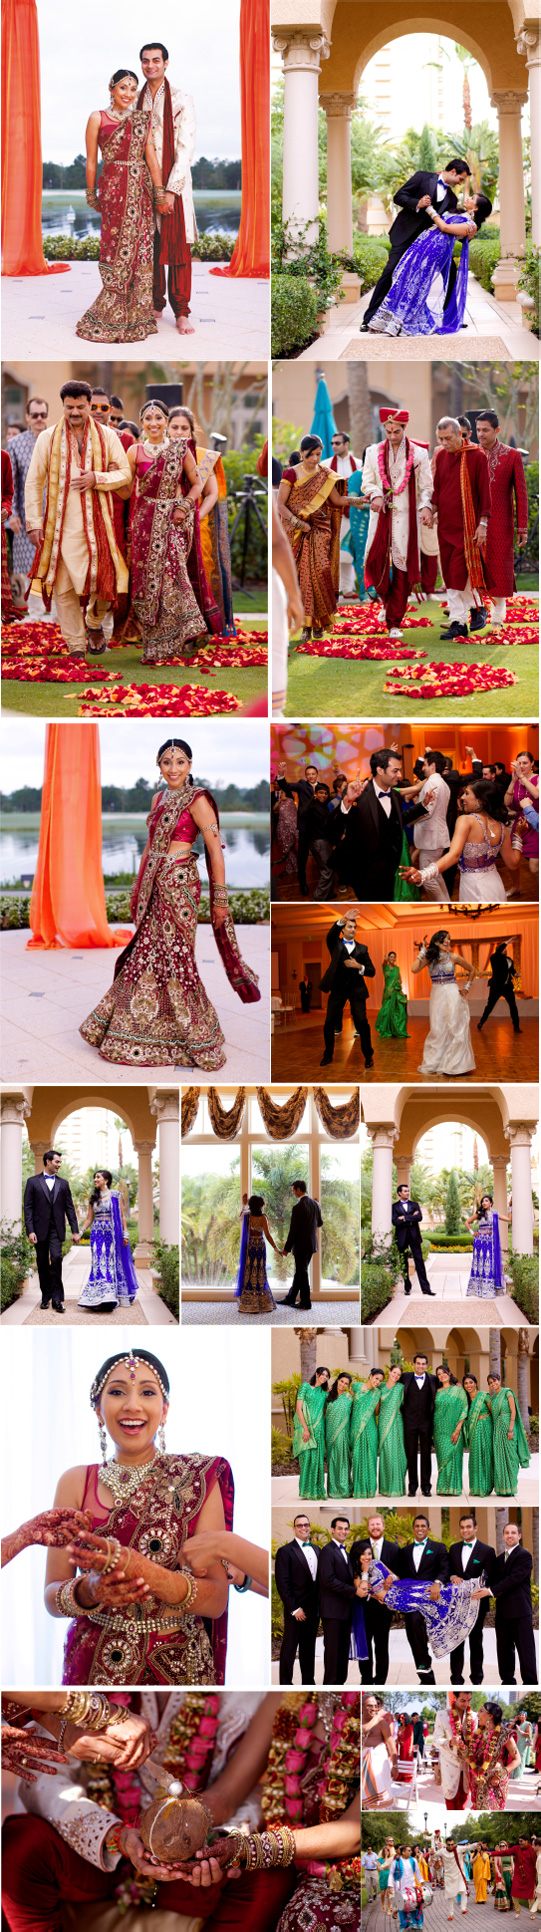 Sumitha weds Sean